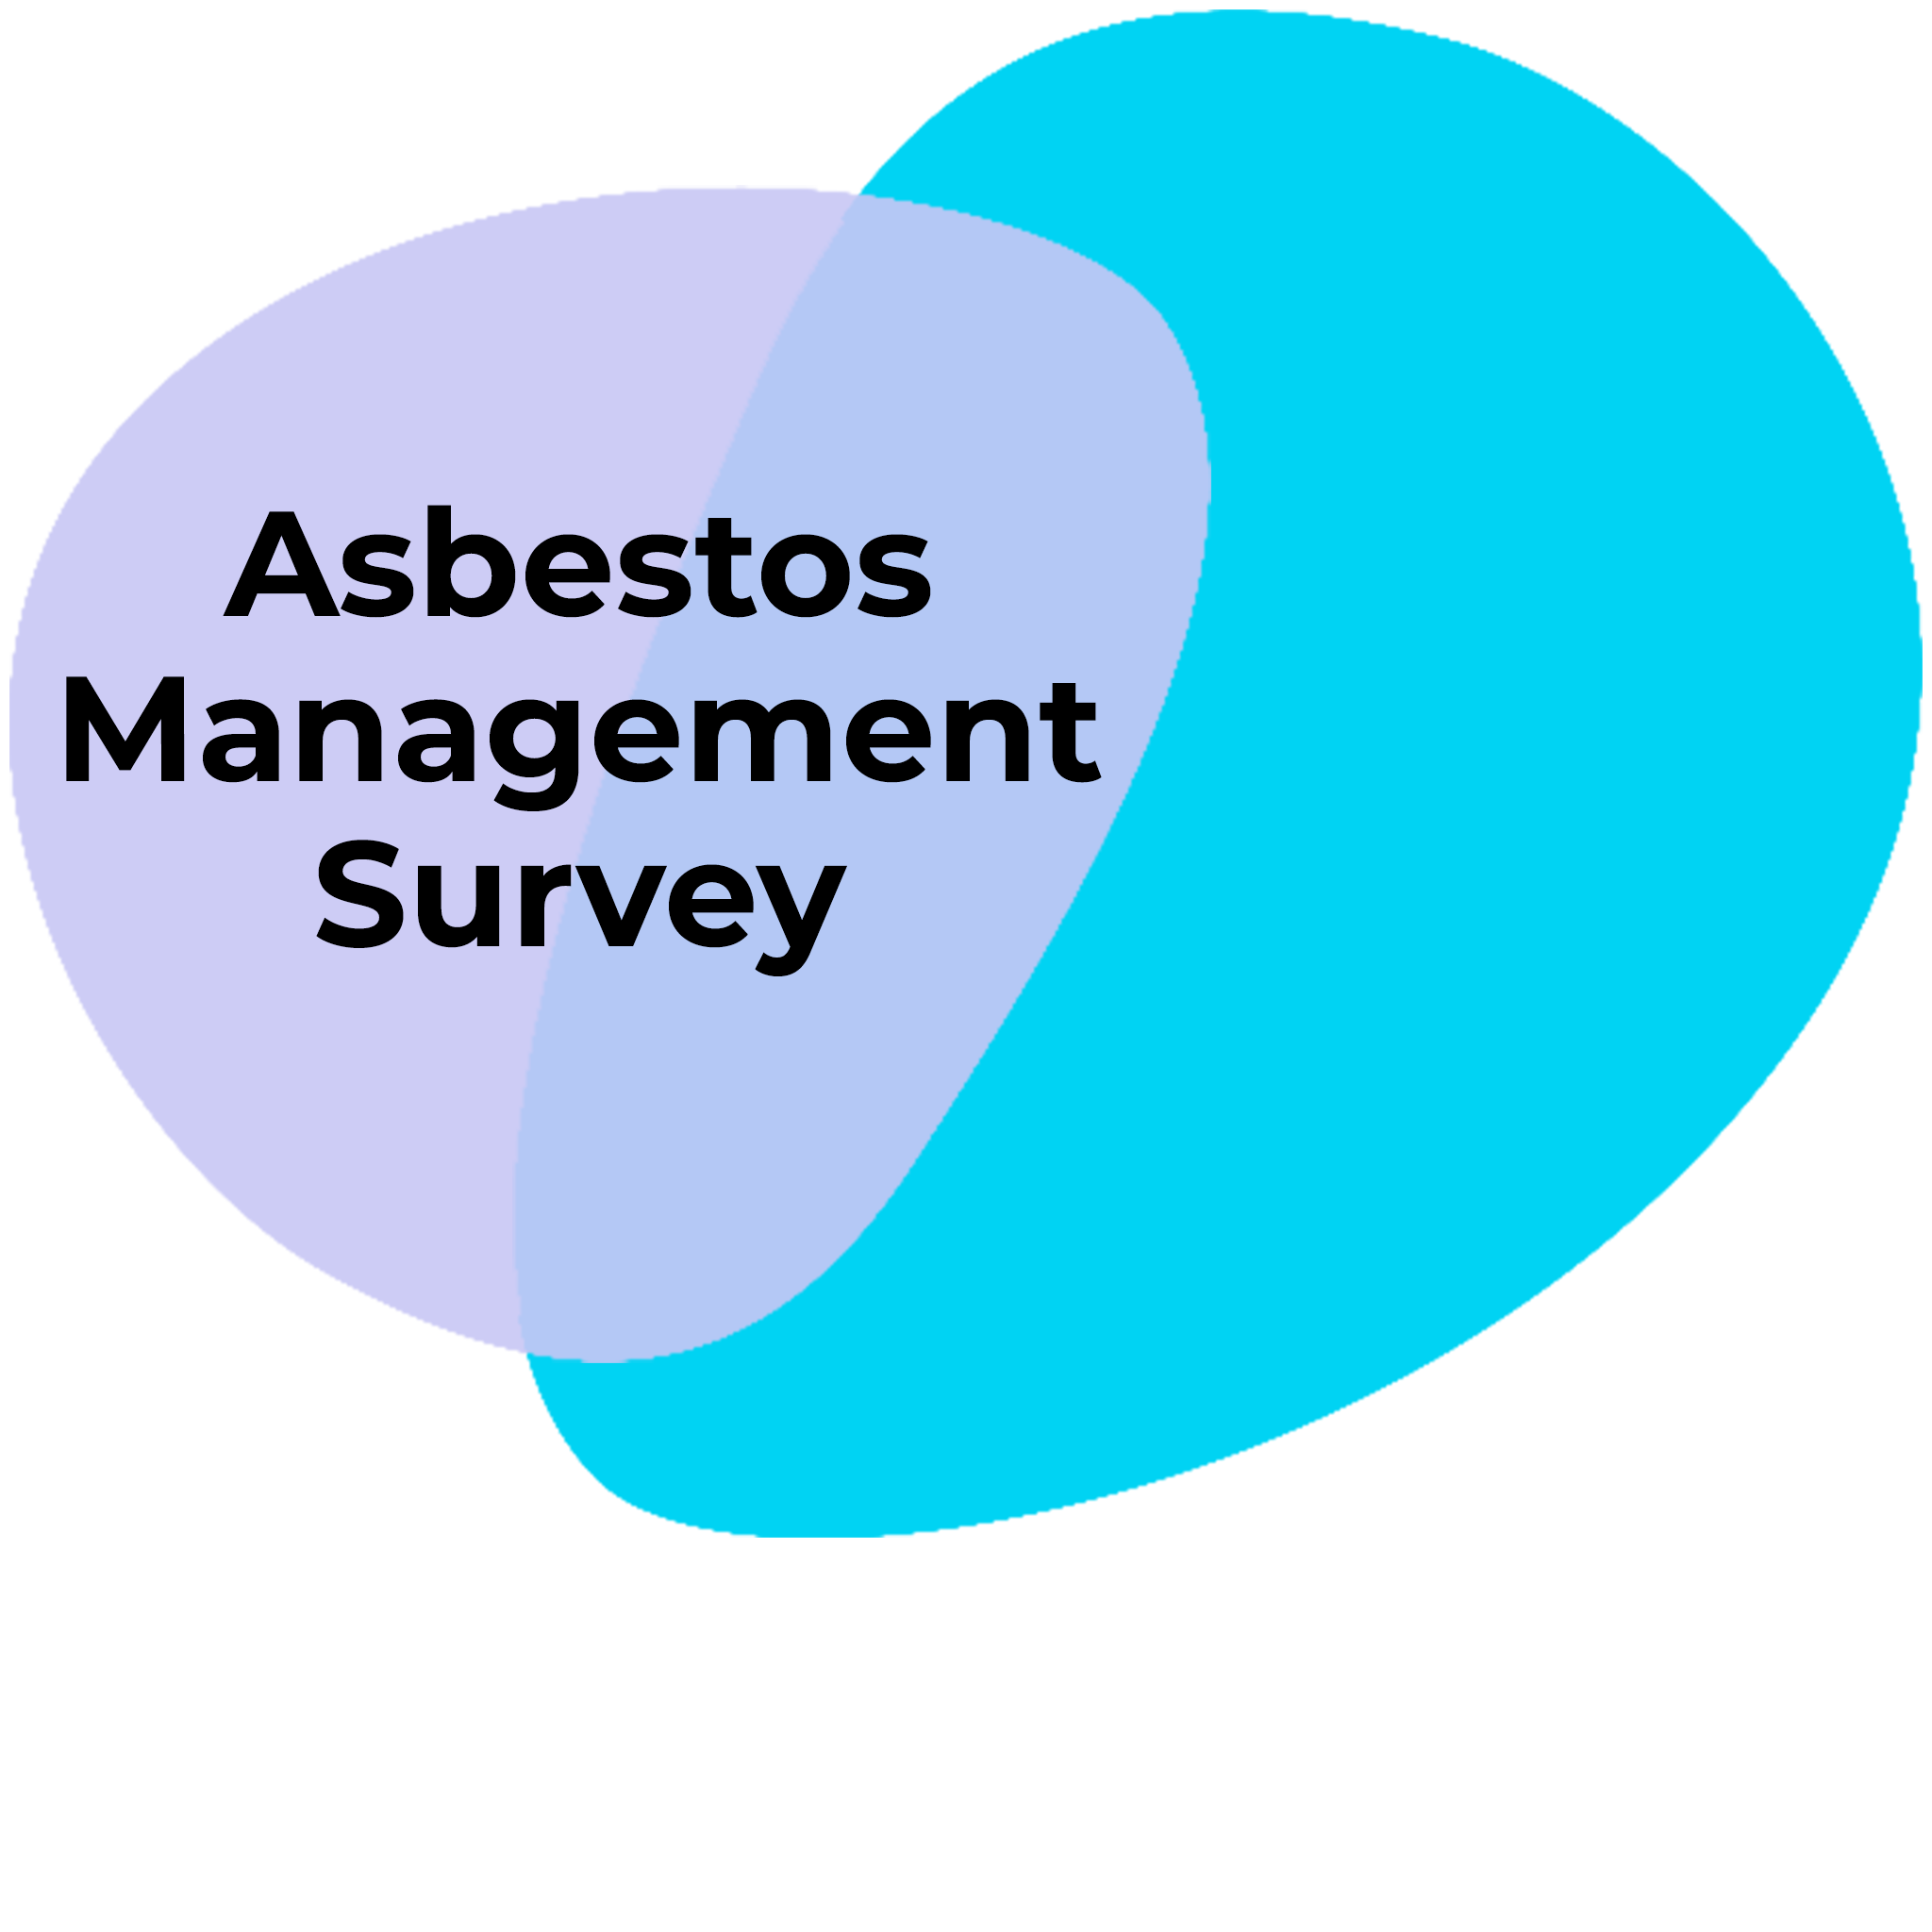 Asbestos management surveys